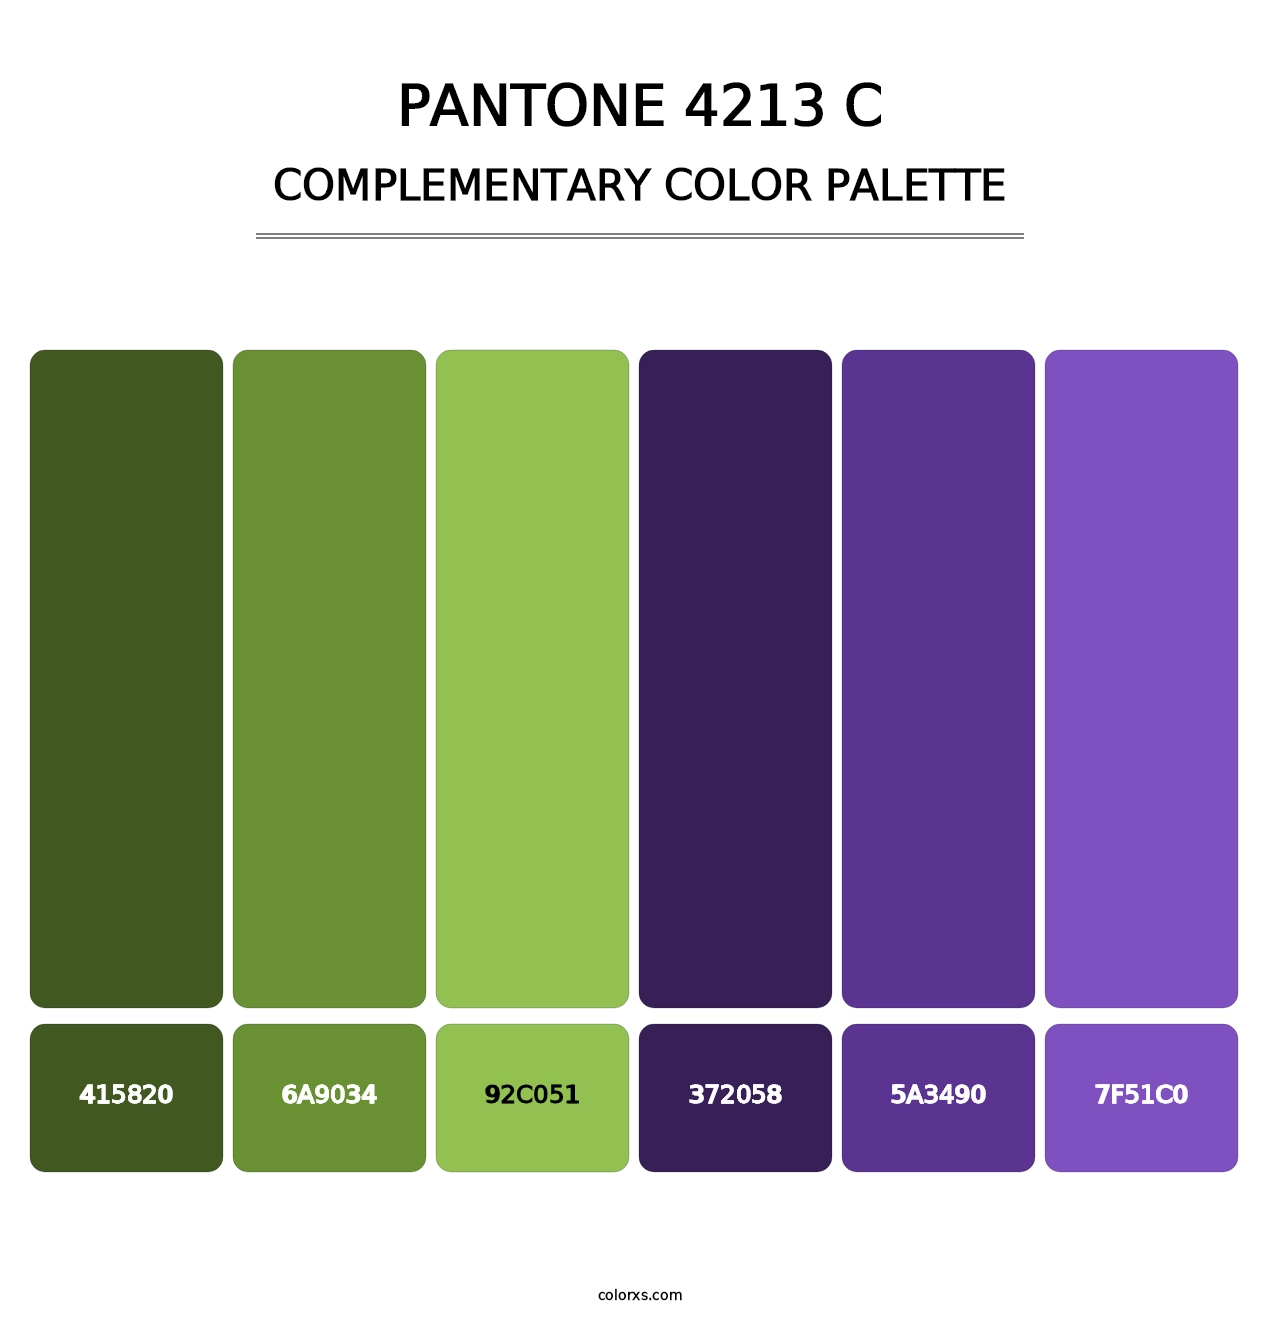 PANTONE 4213 C - Complementary Color Palette